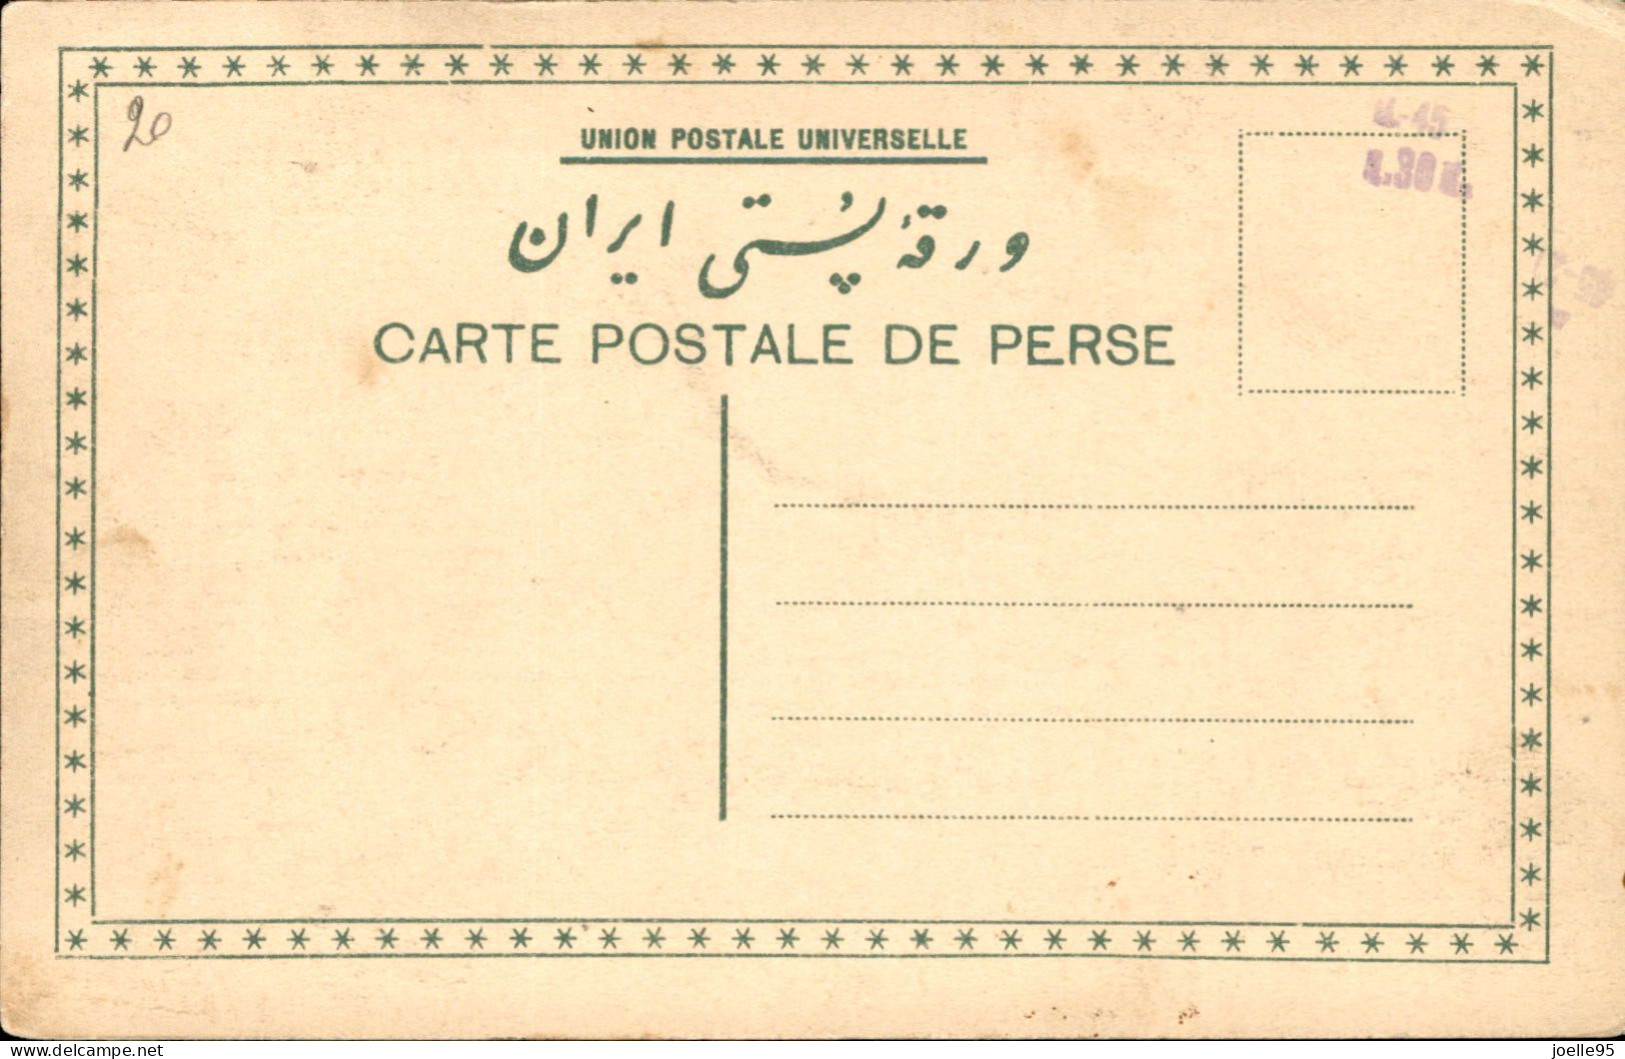 IRAN - PERSIA - Enzeli - 1910 - Irán